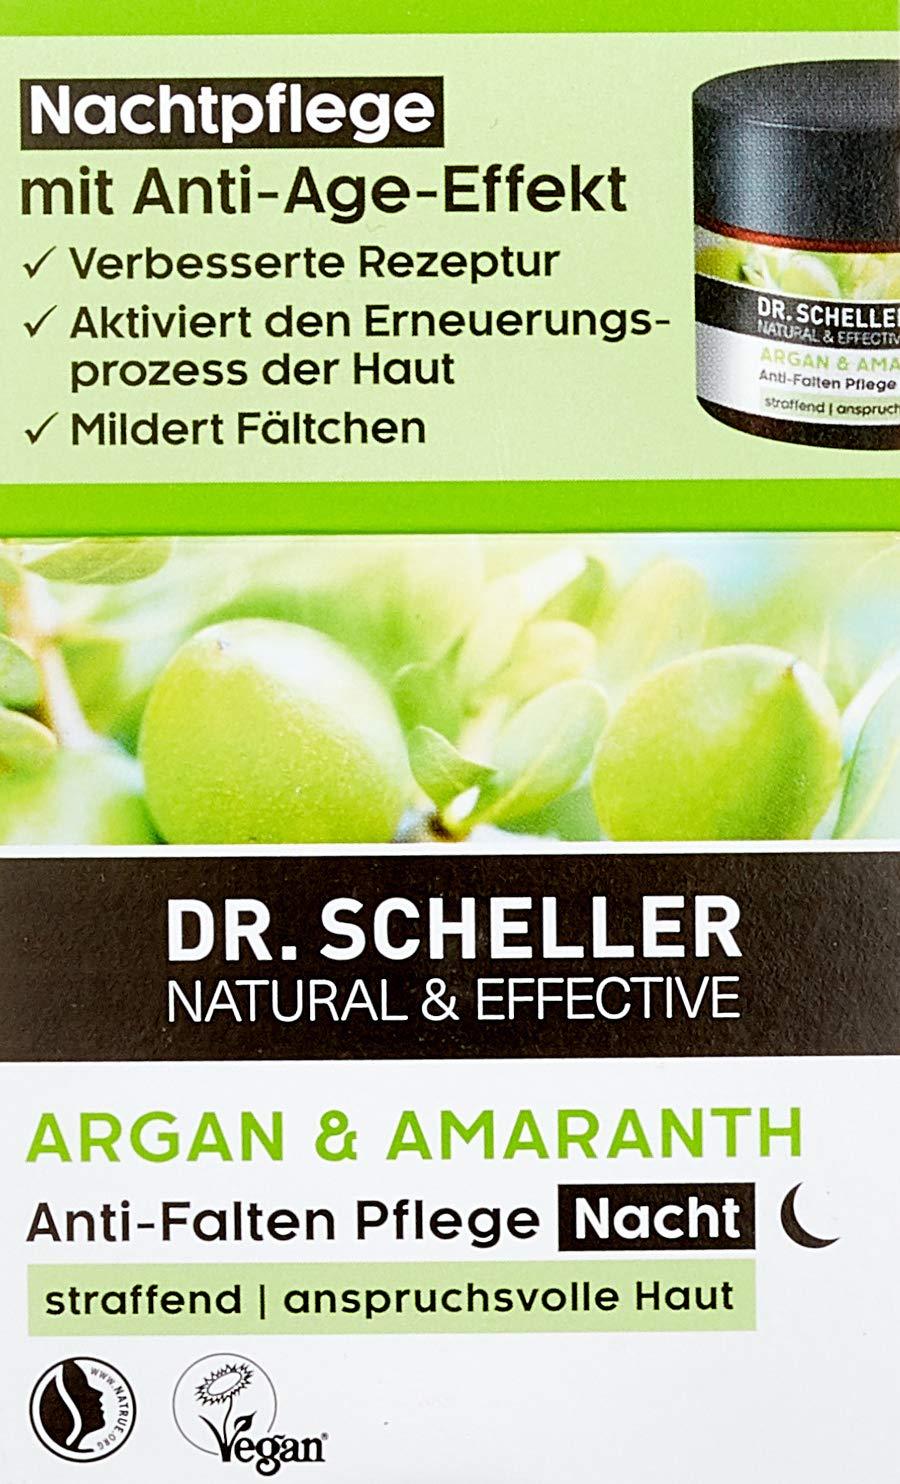 Dr. Scheller Anti-Wrinkle Care Night Argan & Amaranth 1.7 oz (49 g)